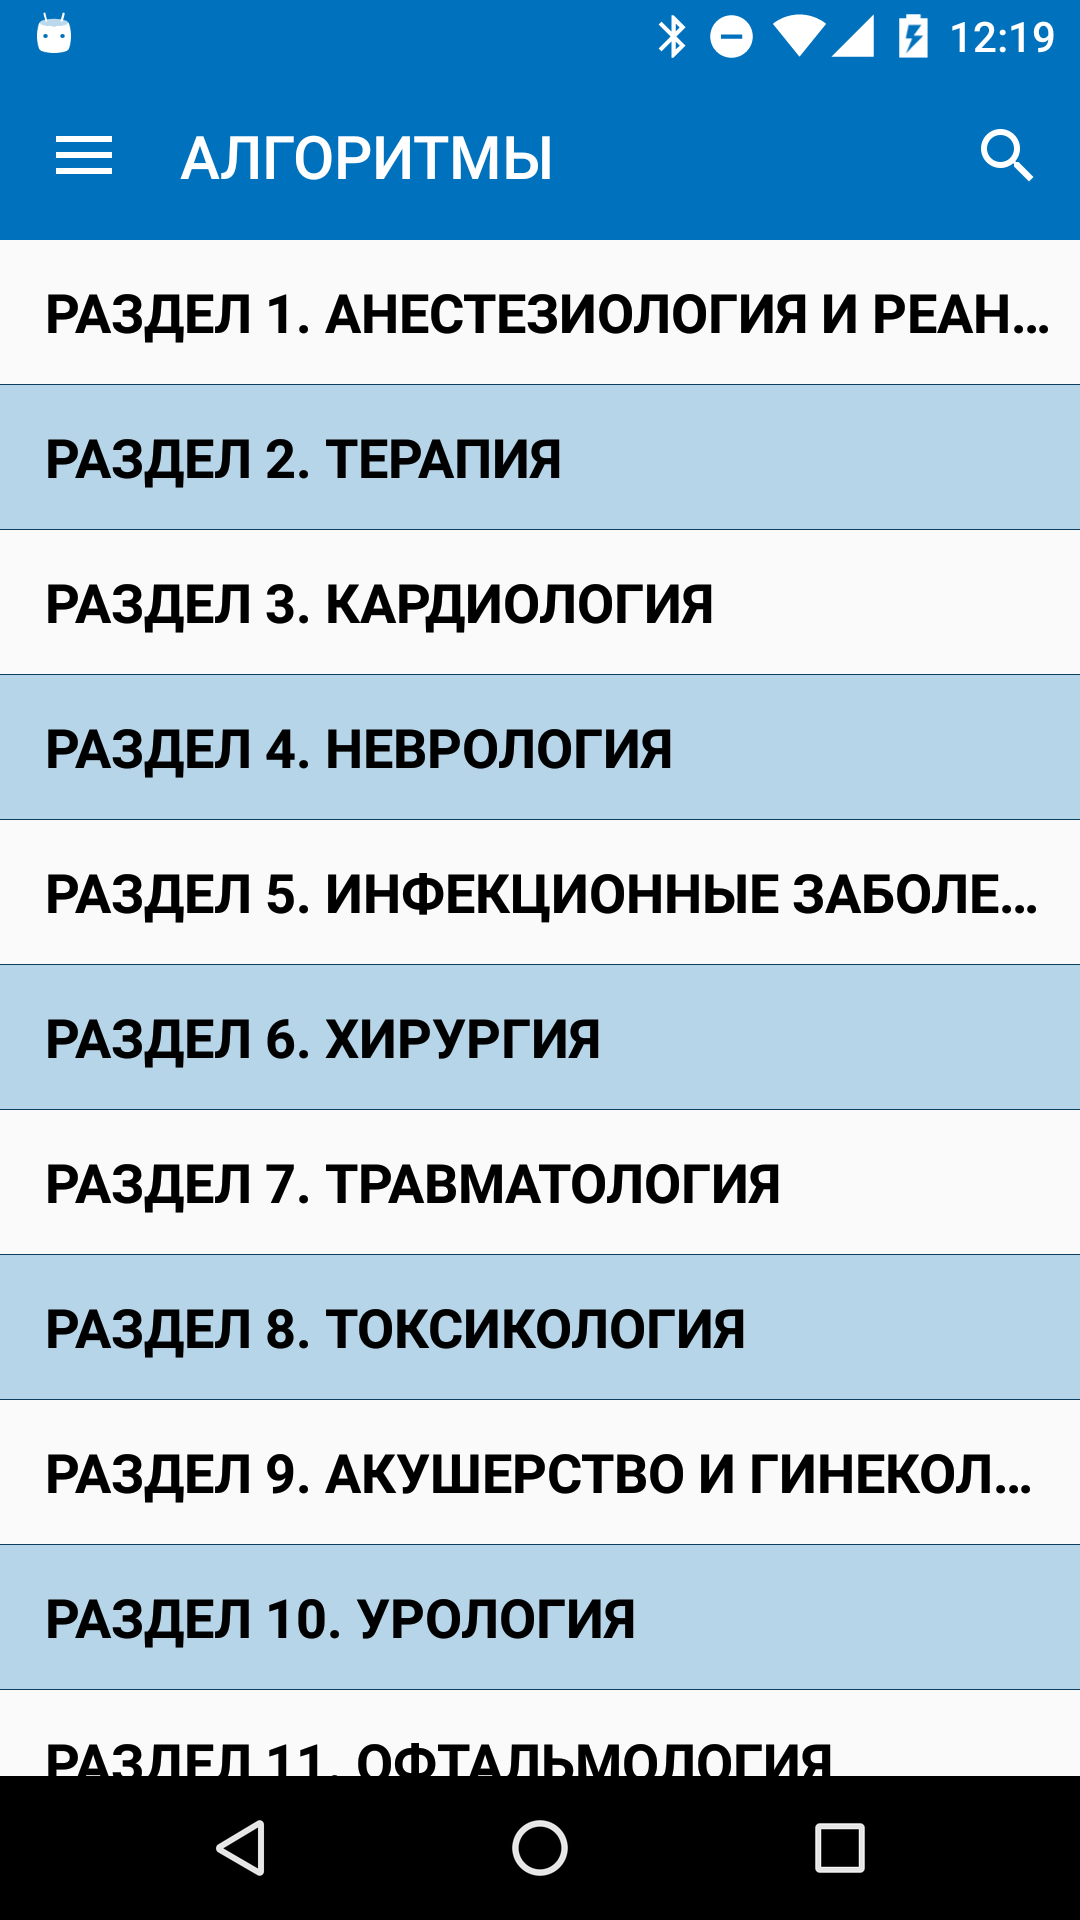 Android application Справочник СМП screenshort